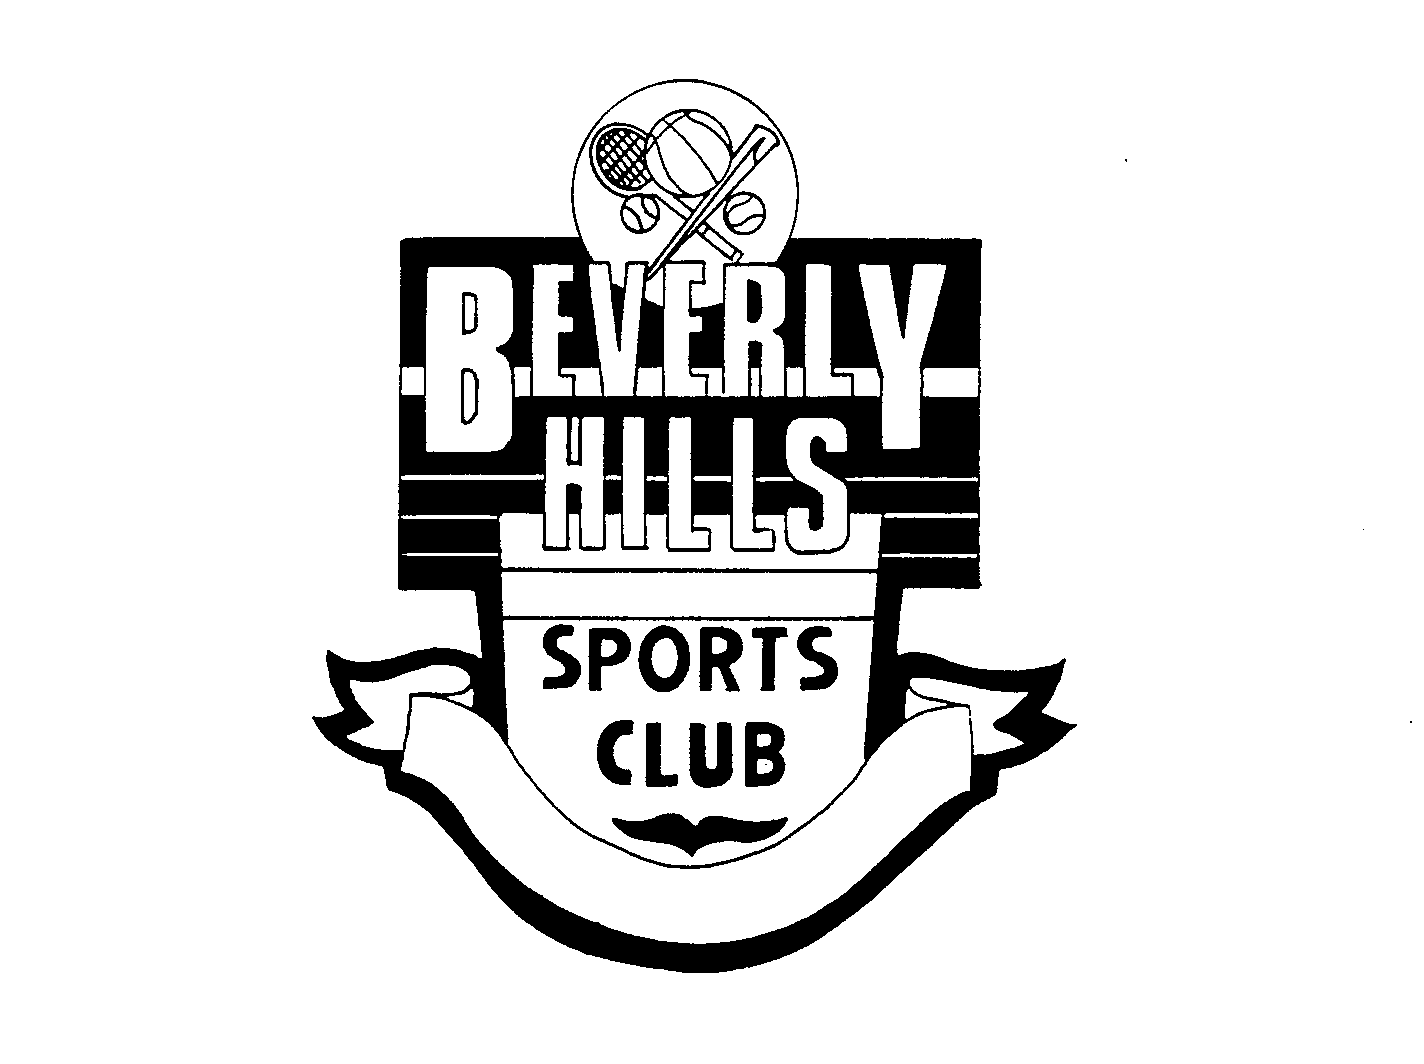  BEVERLY HILLS SPORTS CLUB